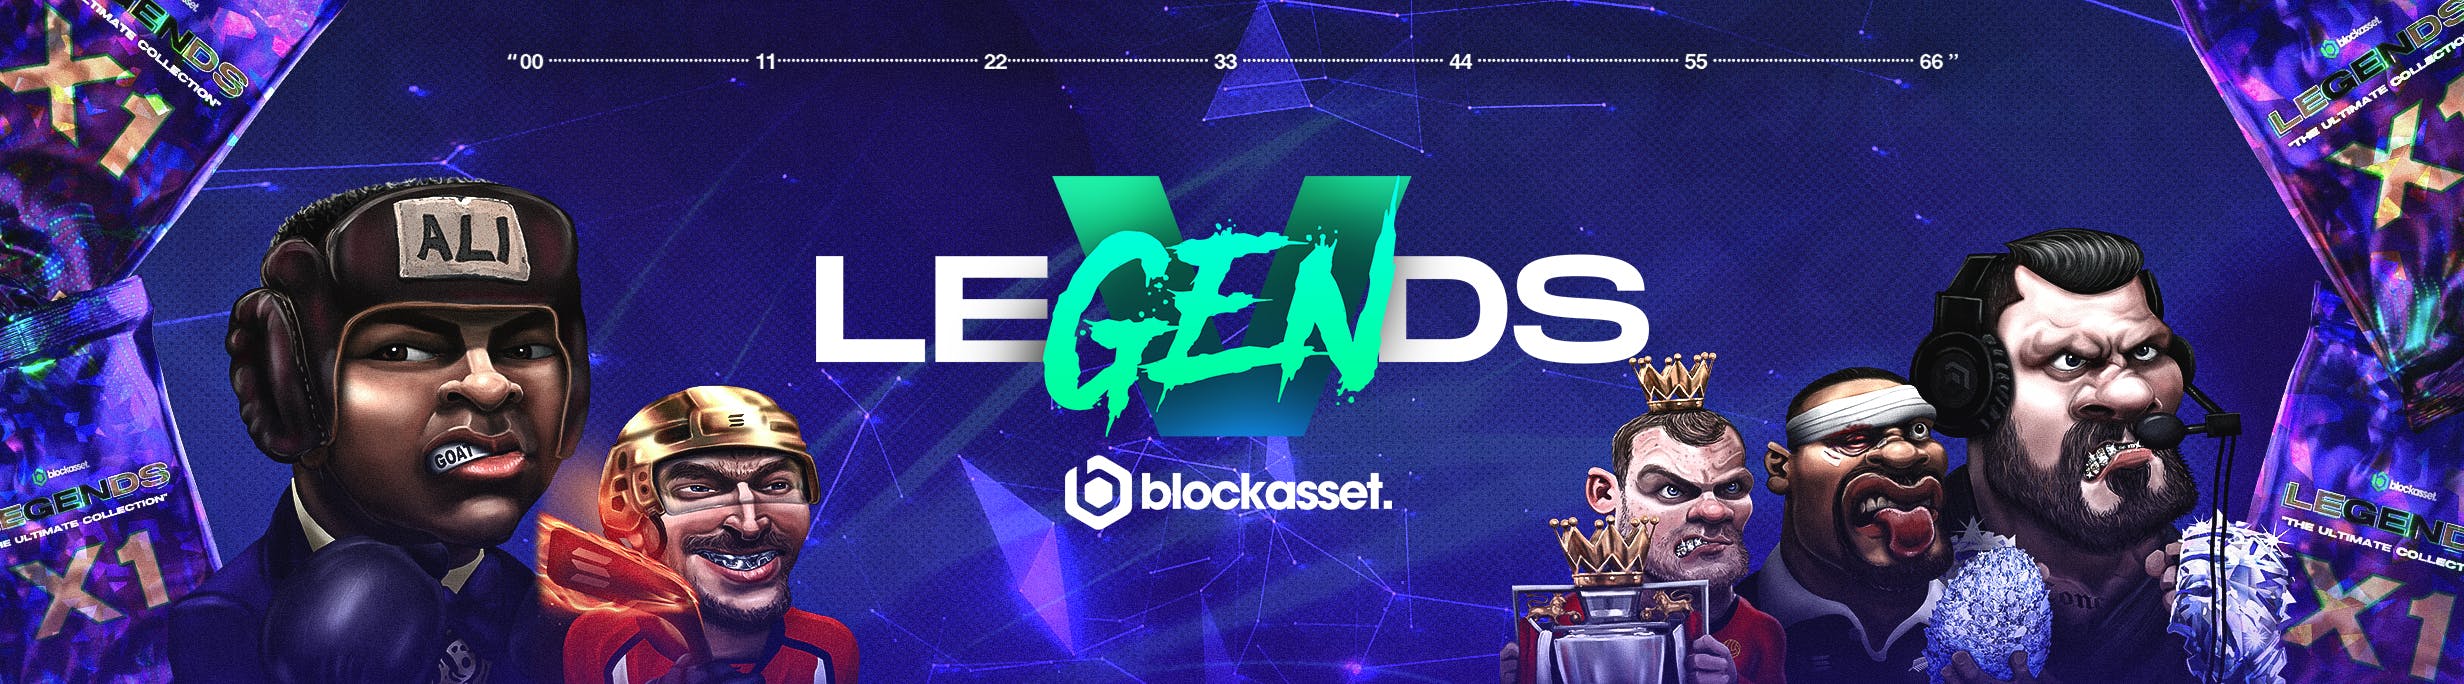 Blockasset Legends cover